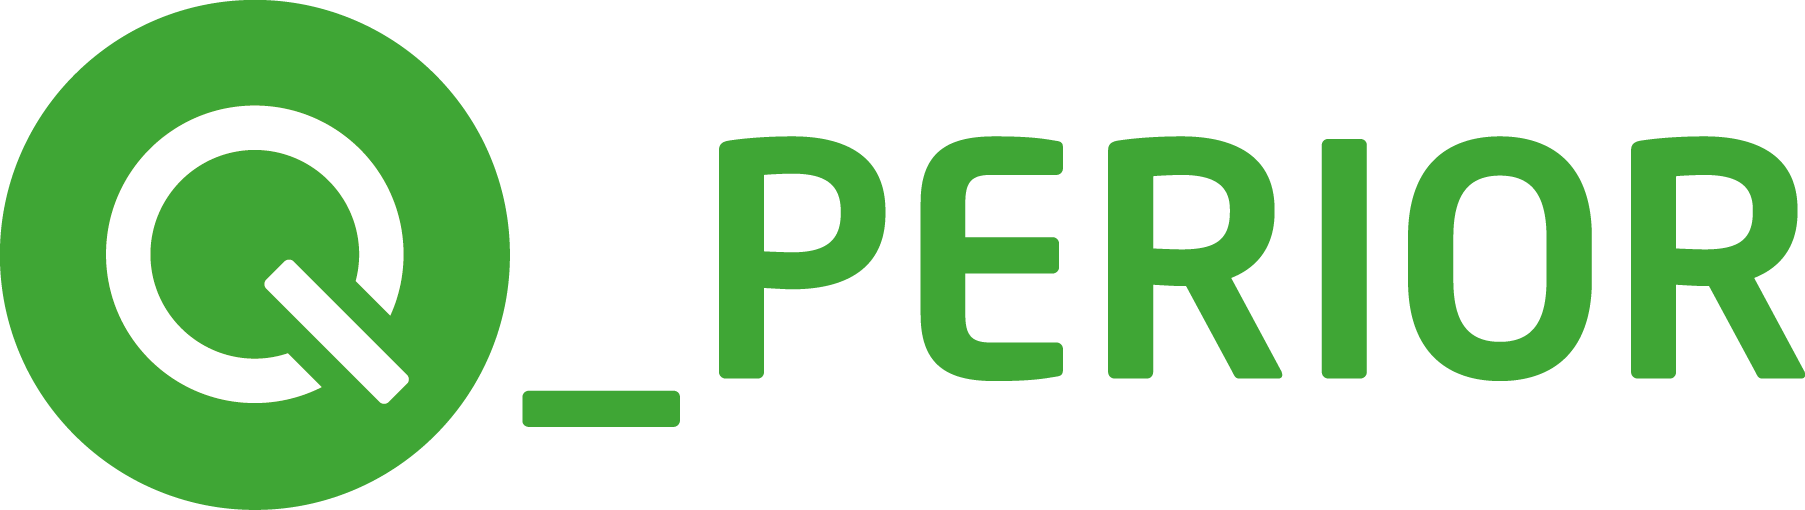 Q_PERIOR Logo Nitrobox Partner